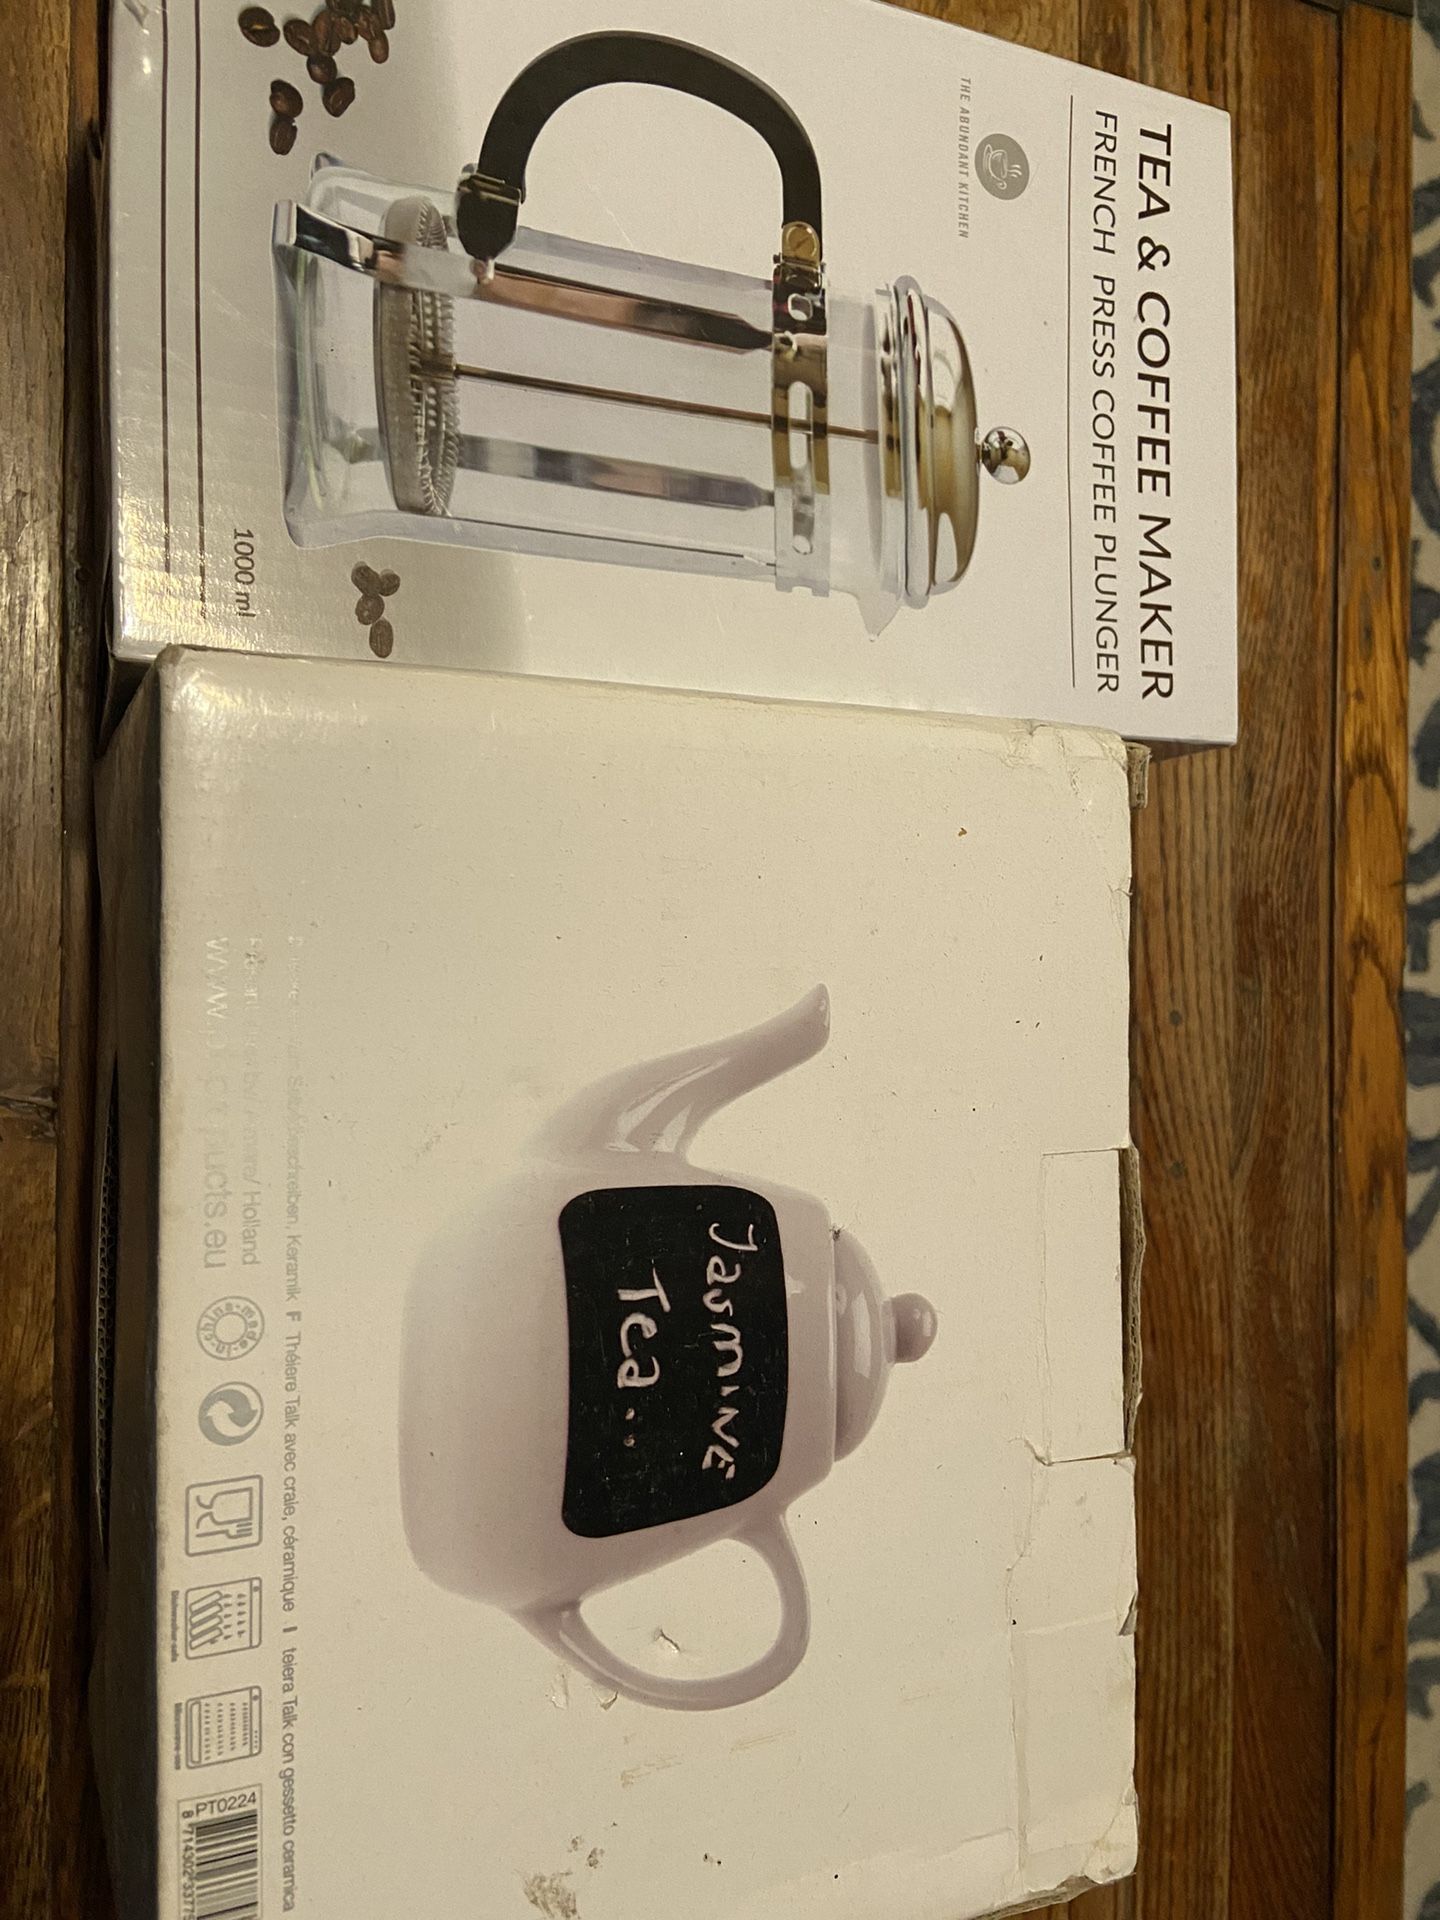 New open box tea coffee maker French press plunger tea pot chalk ceramic kitchen supplies 